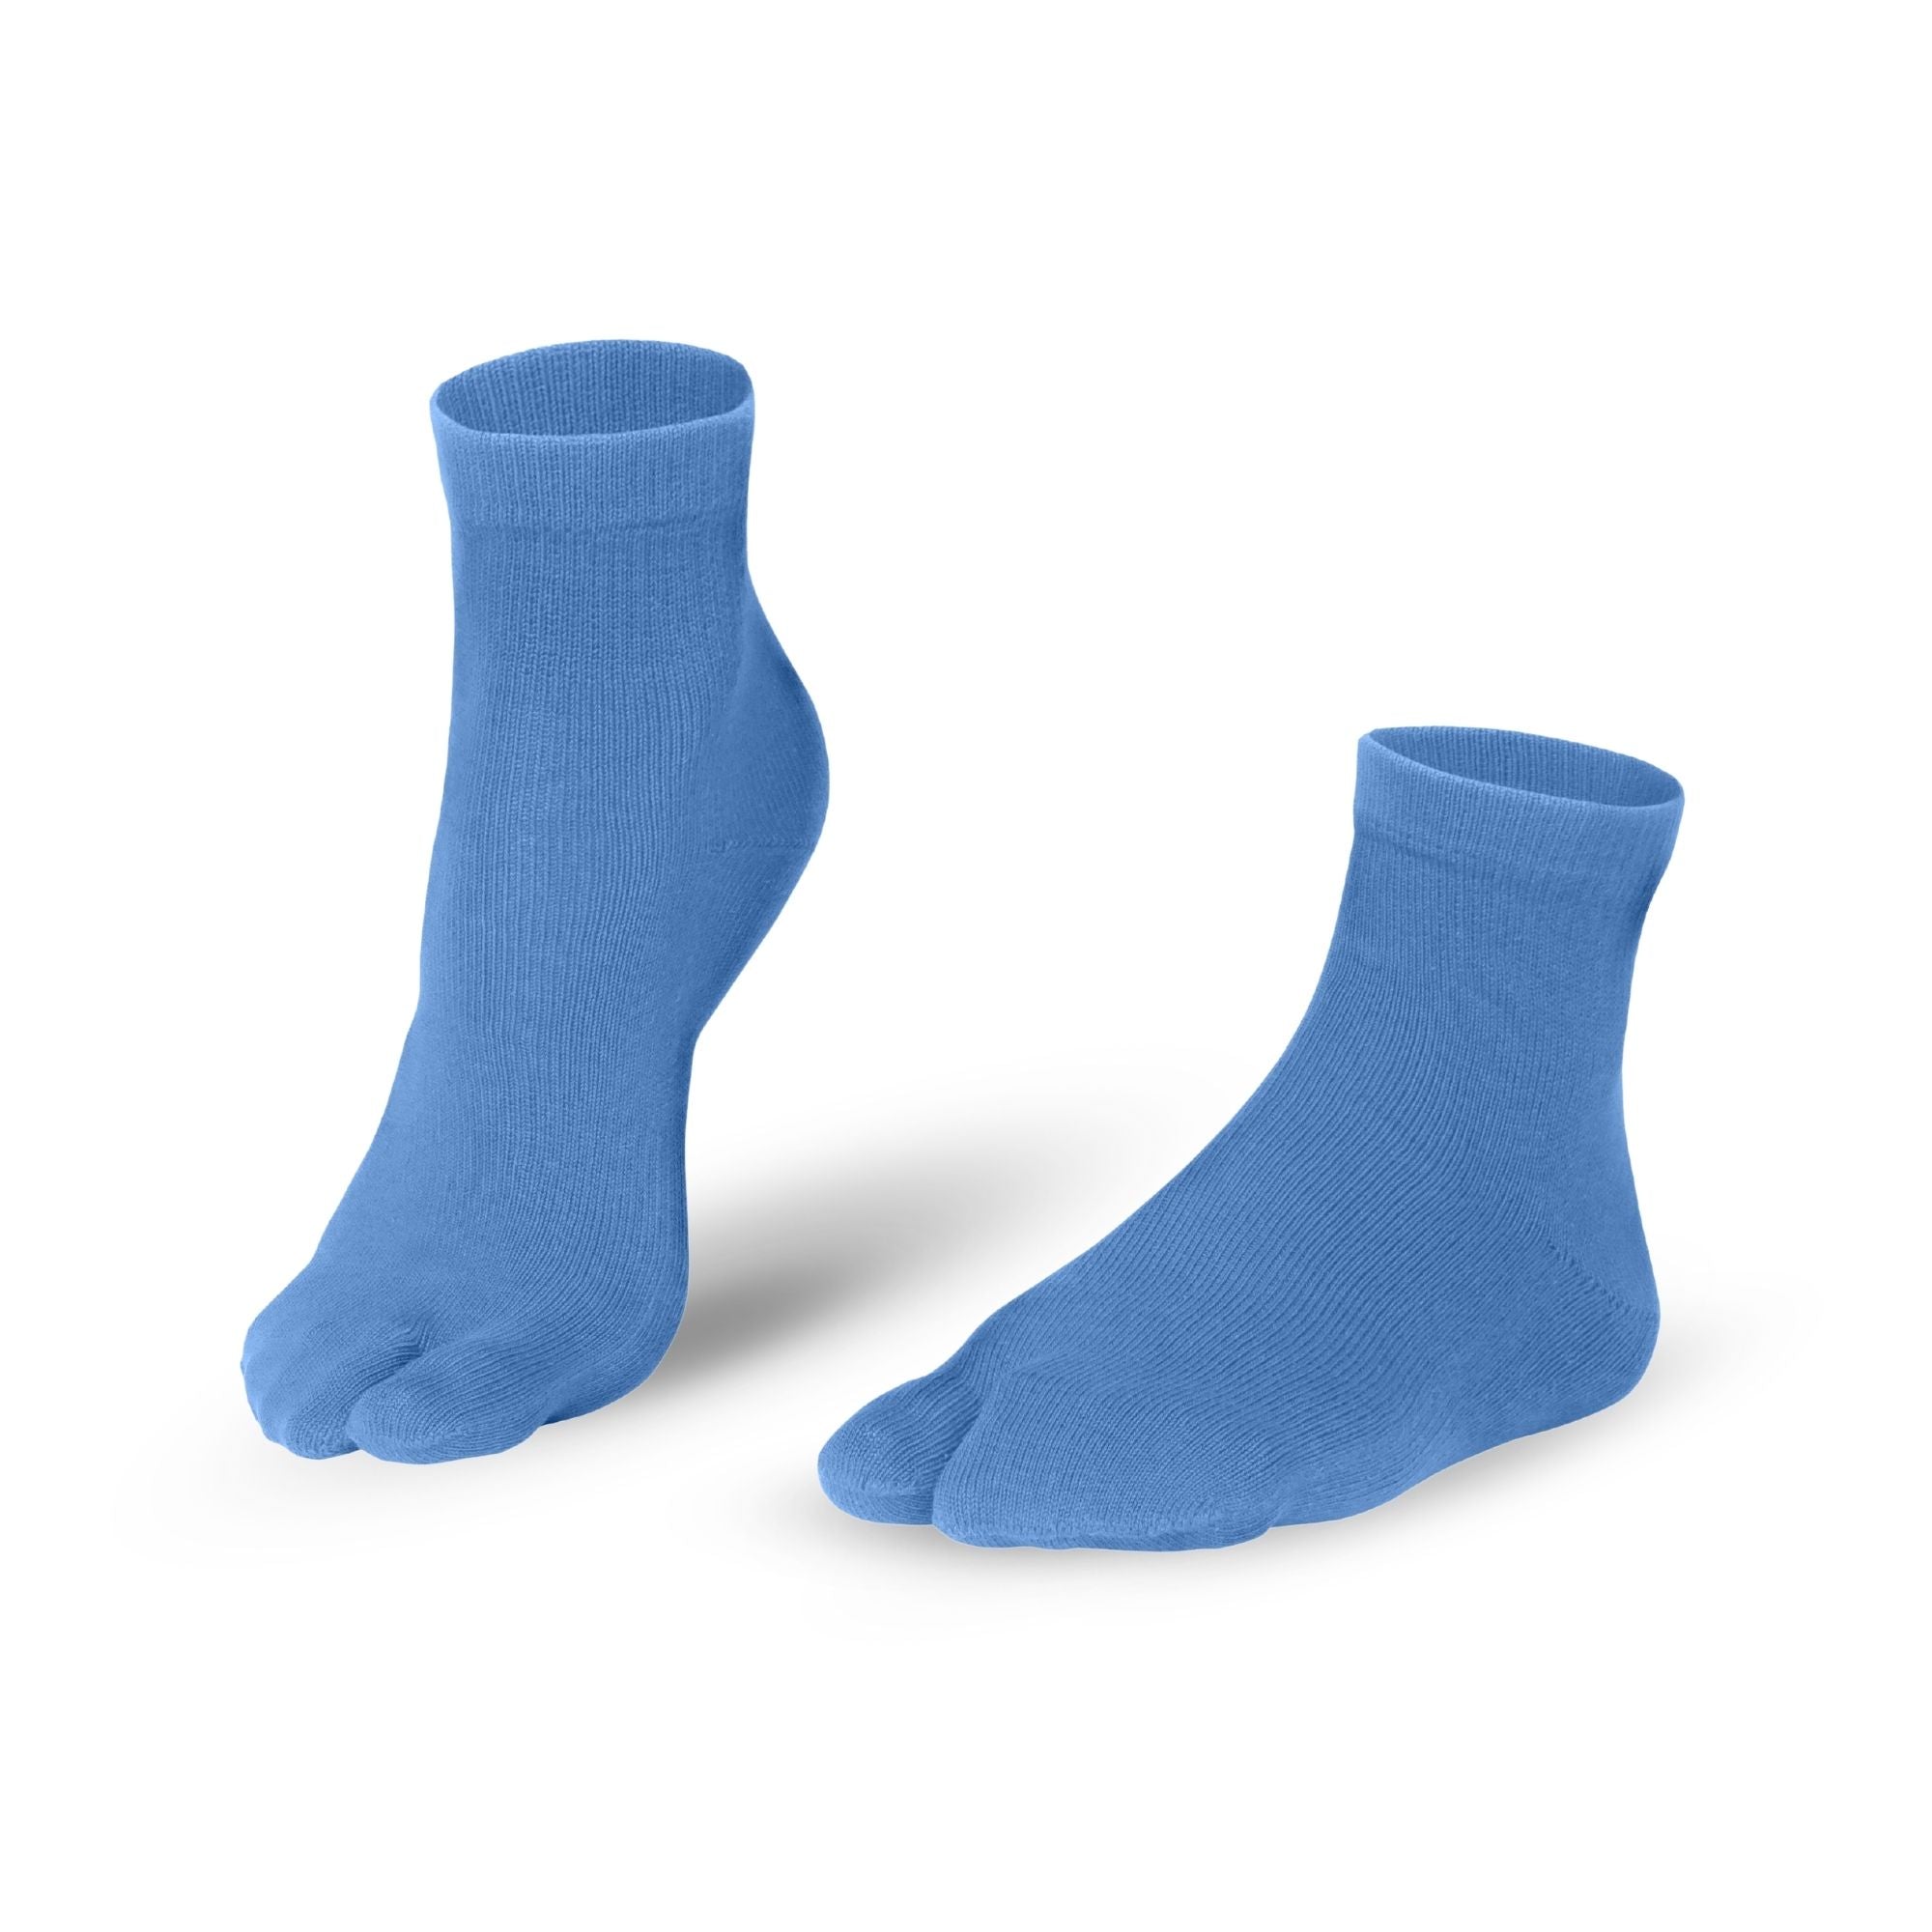 Knitido Traditionals Tabi Socken kurz aus Baumwolle in hellblau